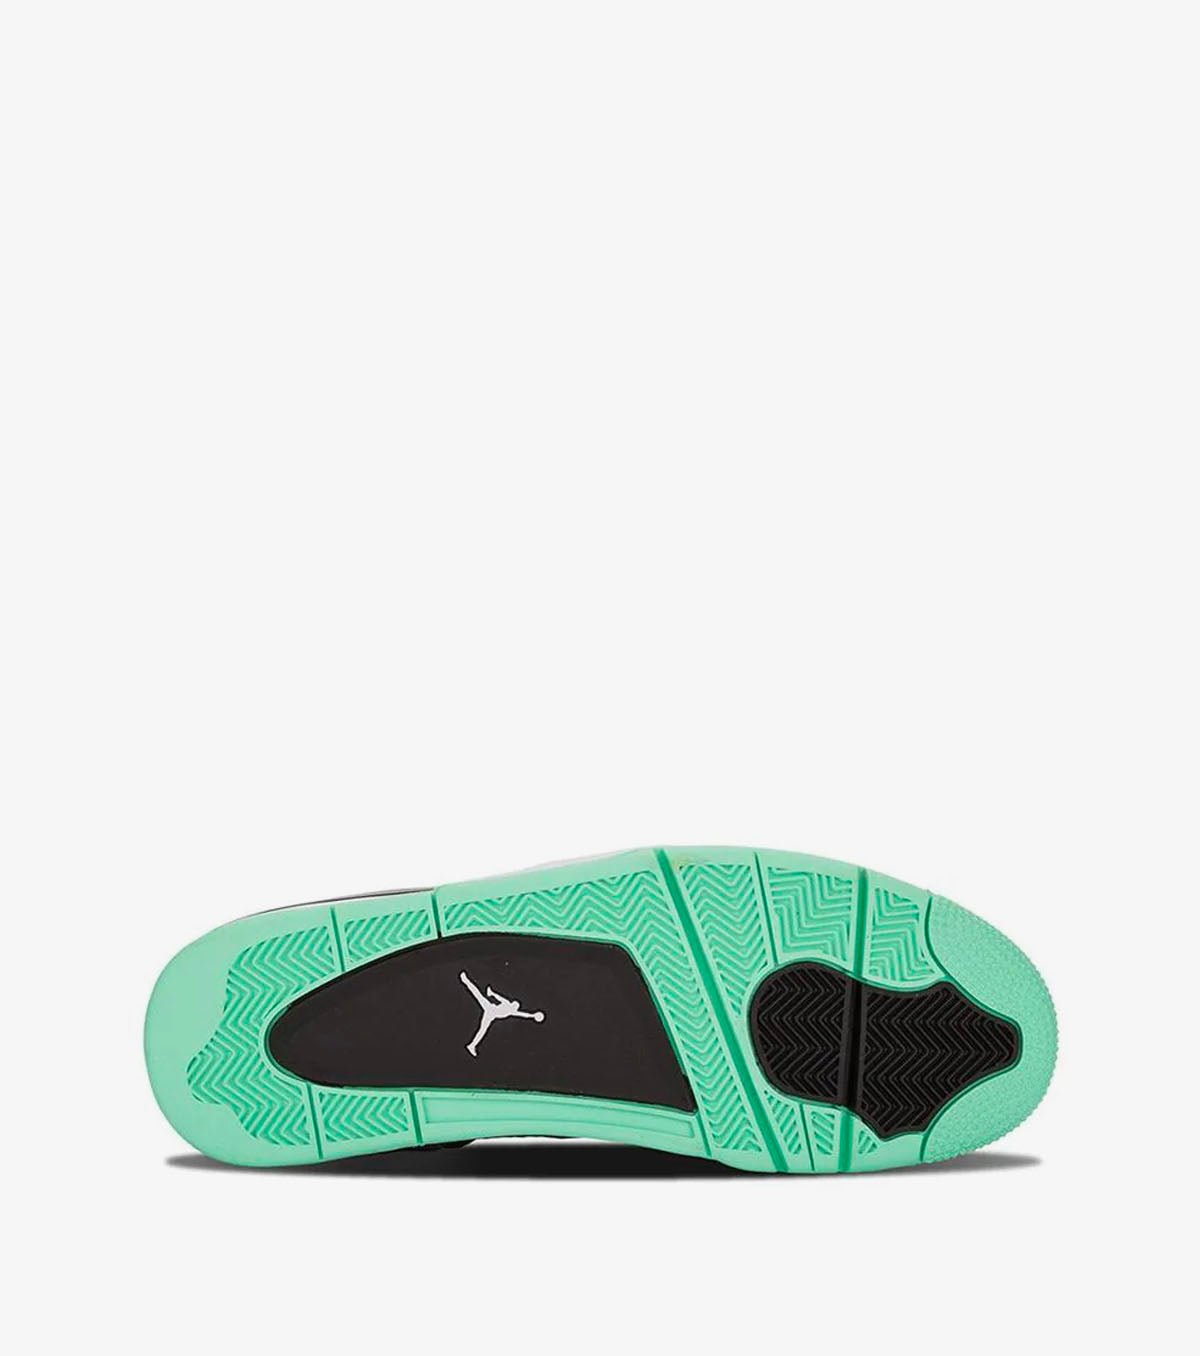 Air Jordan 4 Retro green glow